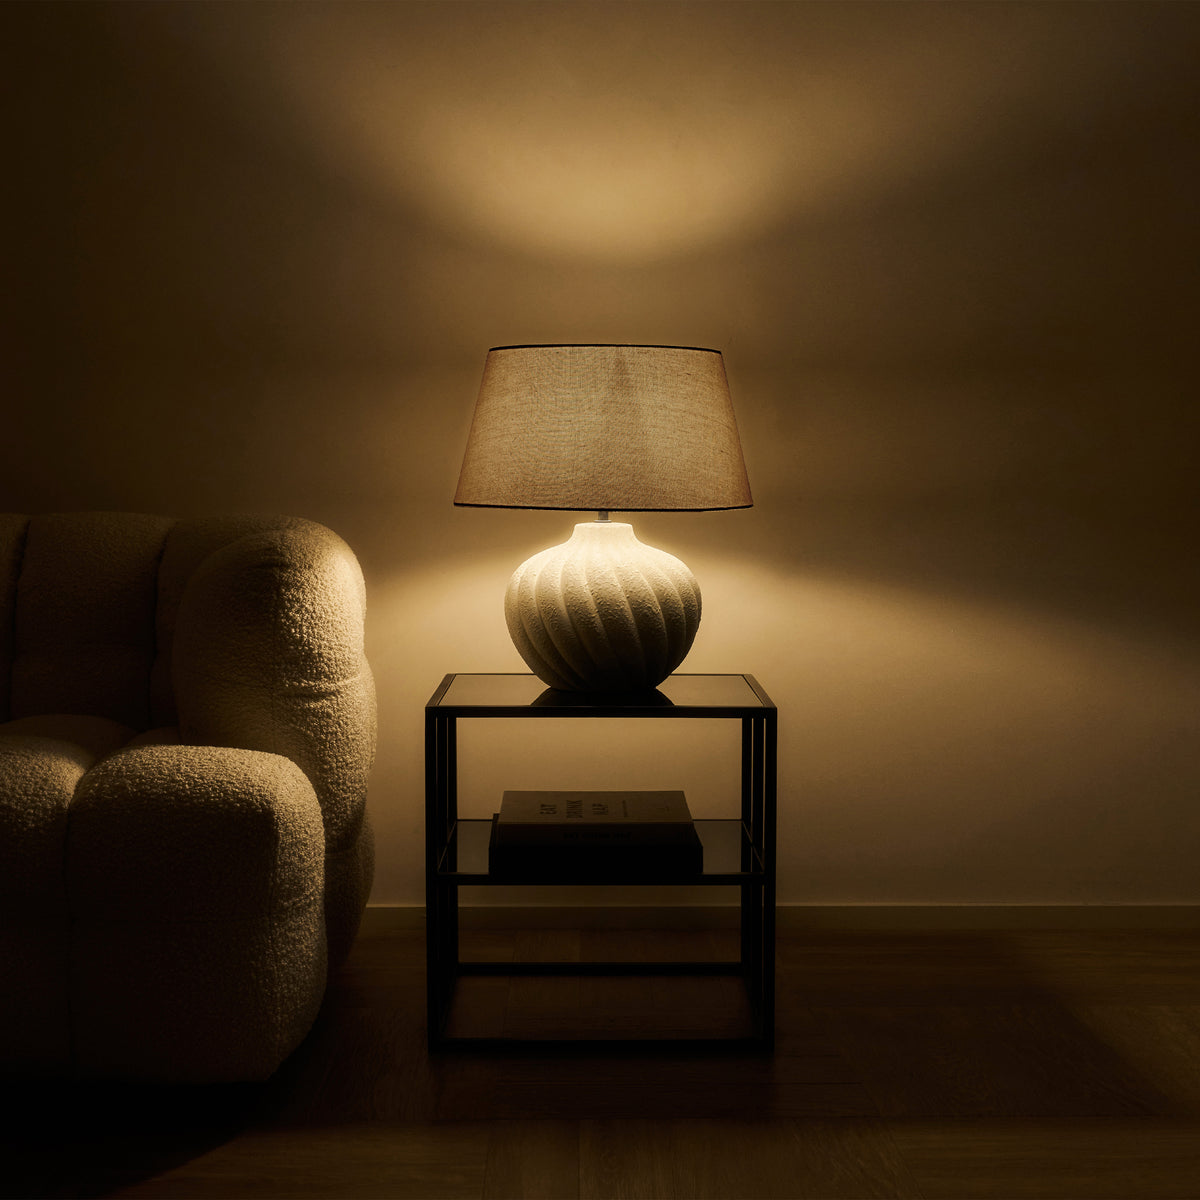 Textured ceramic based table lamp beige shade emitting warm lighting